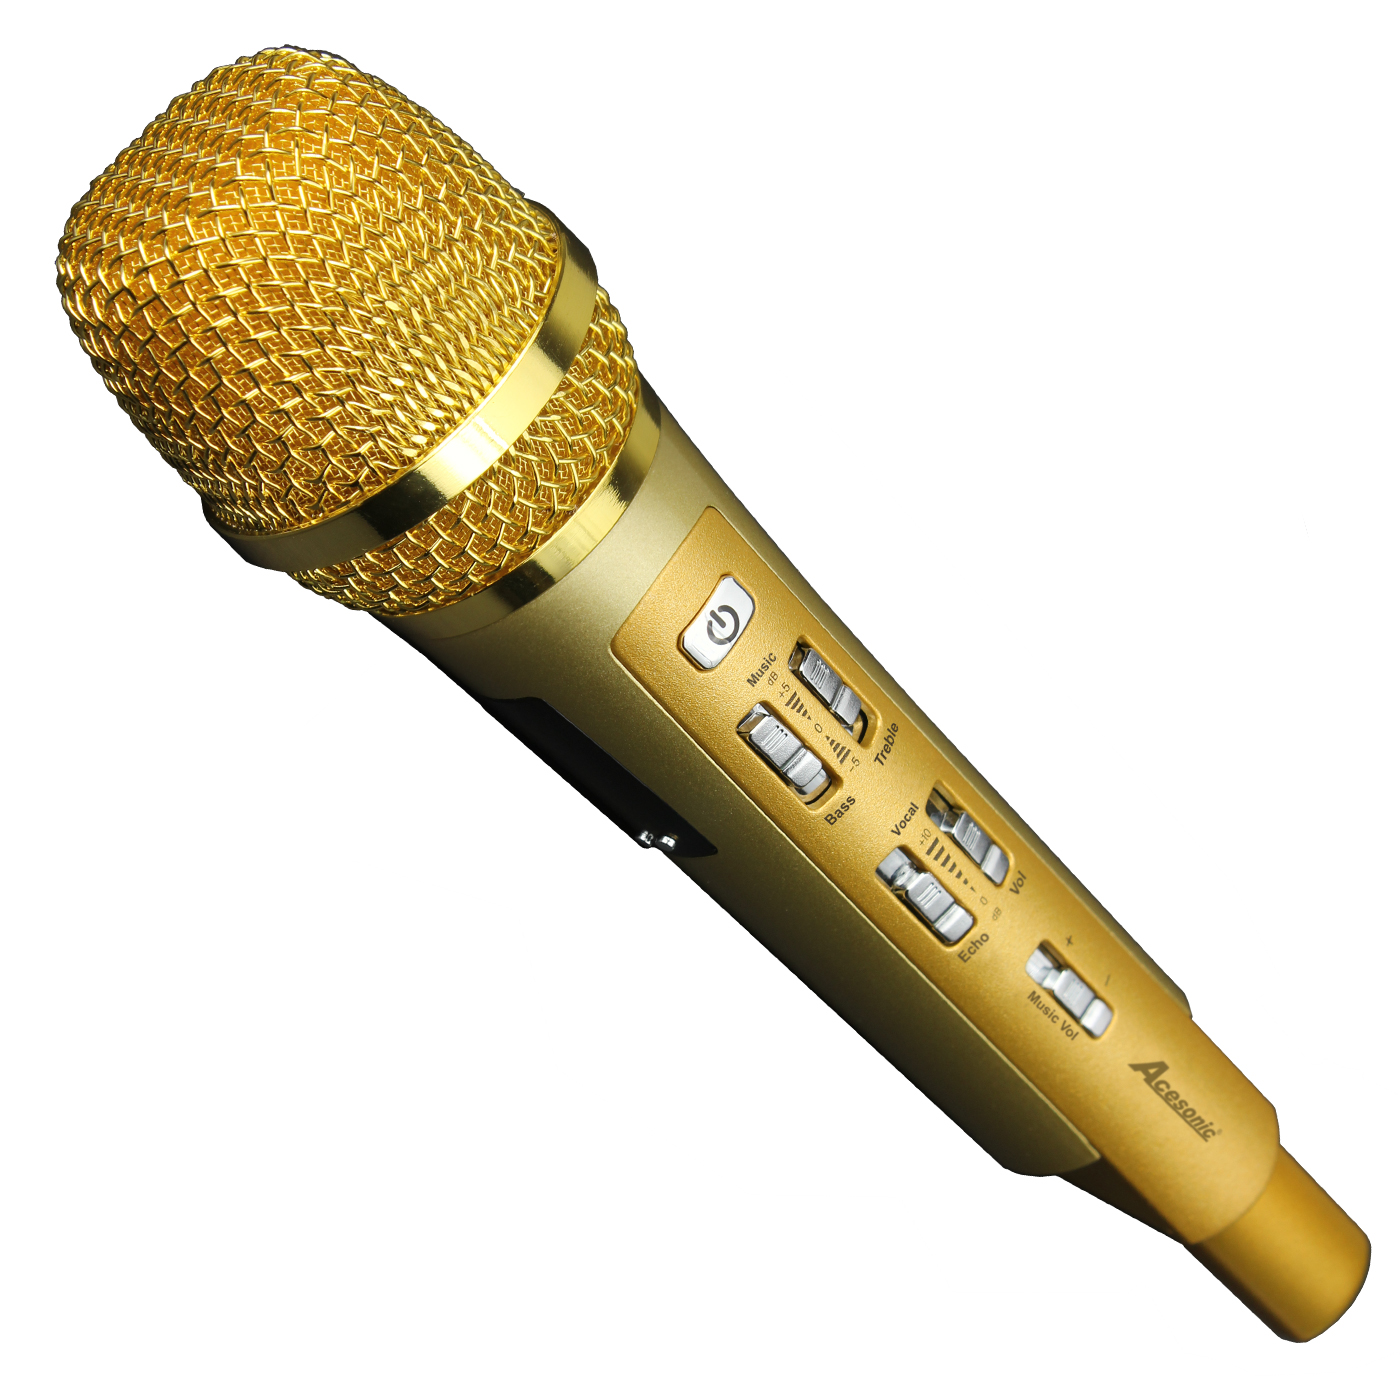 Acesonic RadioStar Karaoke Microphone with Bluetooth & FM ...